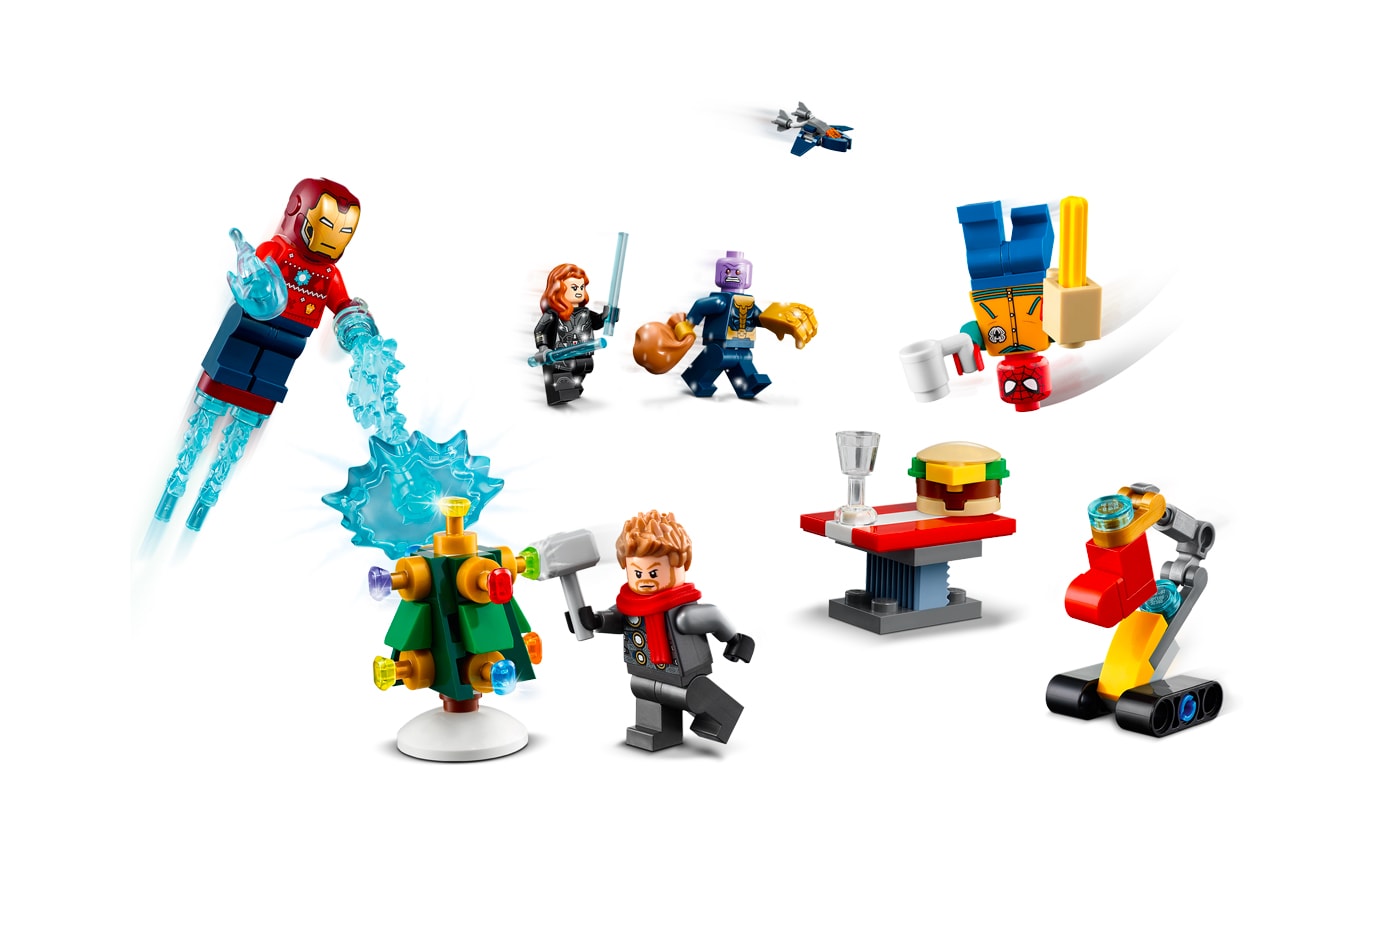 Marvel LEGO The Avengers Advent Calendar release Iron Man Spider-Man Black Widow Thor Captain Marvel Thanos Nick Fury toys 